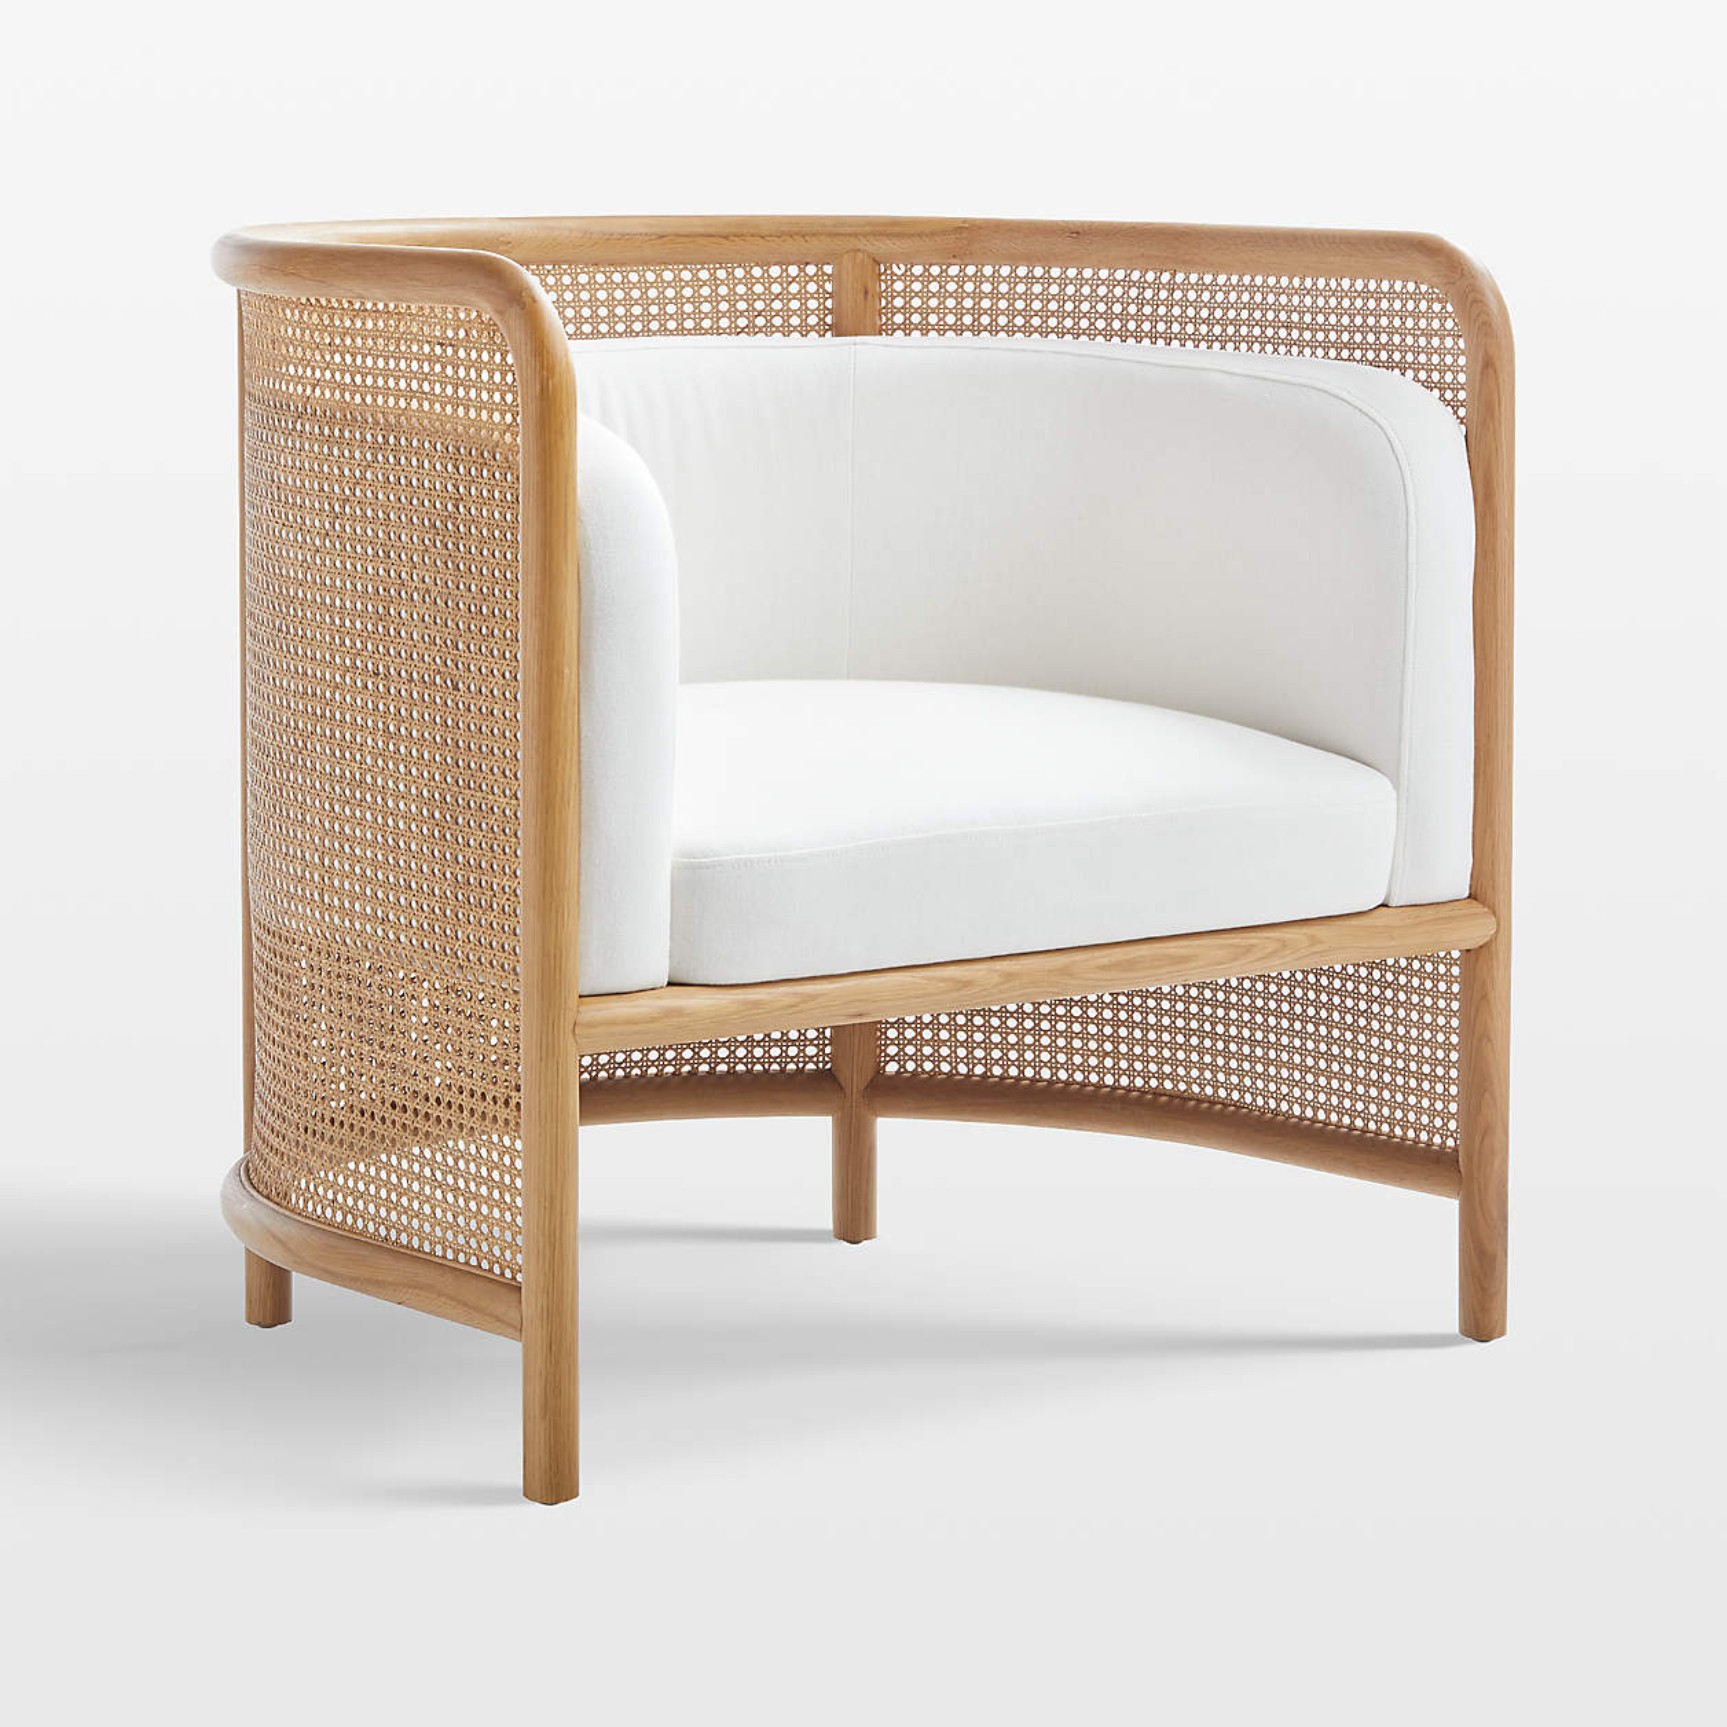 Sierra Lounge Chair - Sierra Lounge Chair image